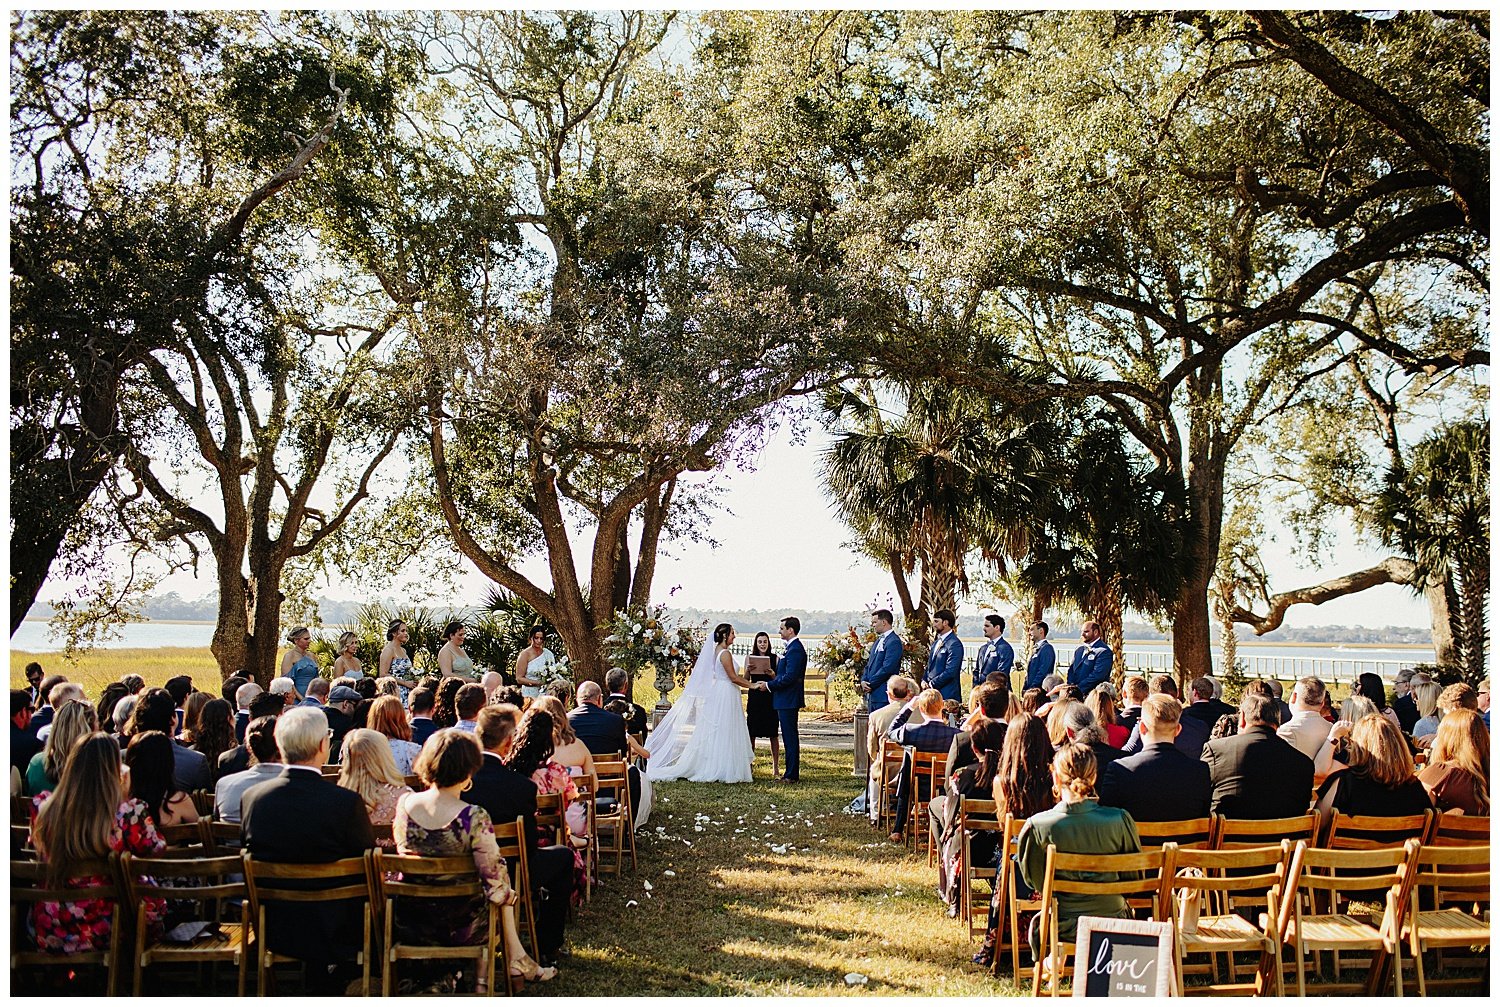 lowndes grove wedding ceremony under trees oaks